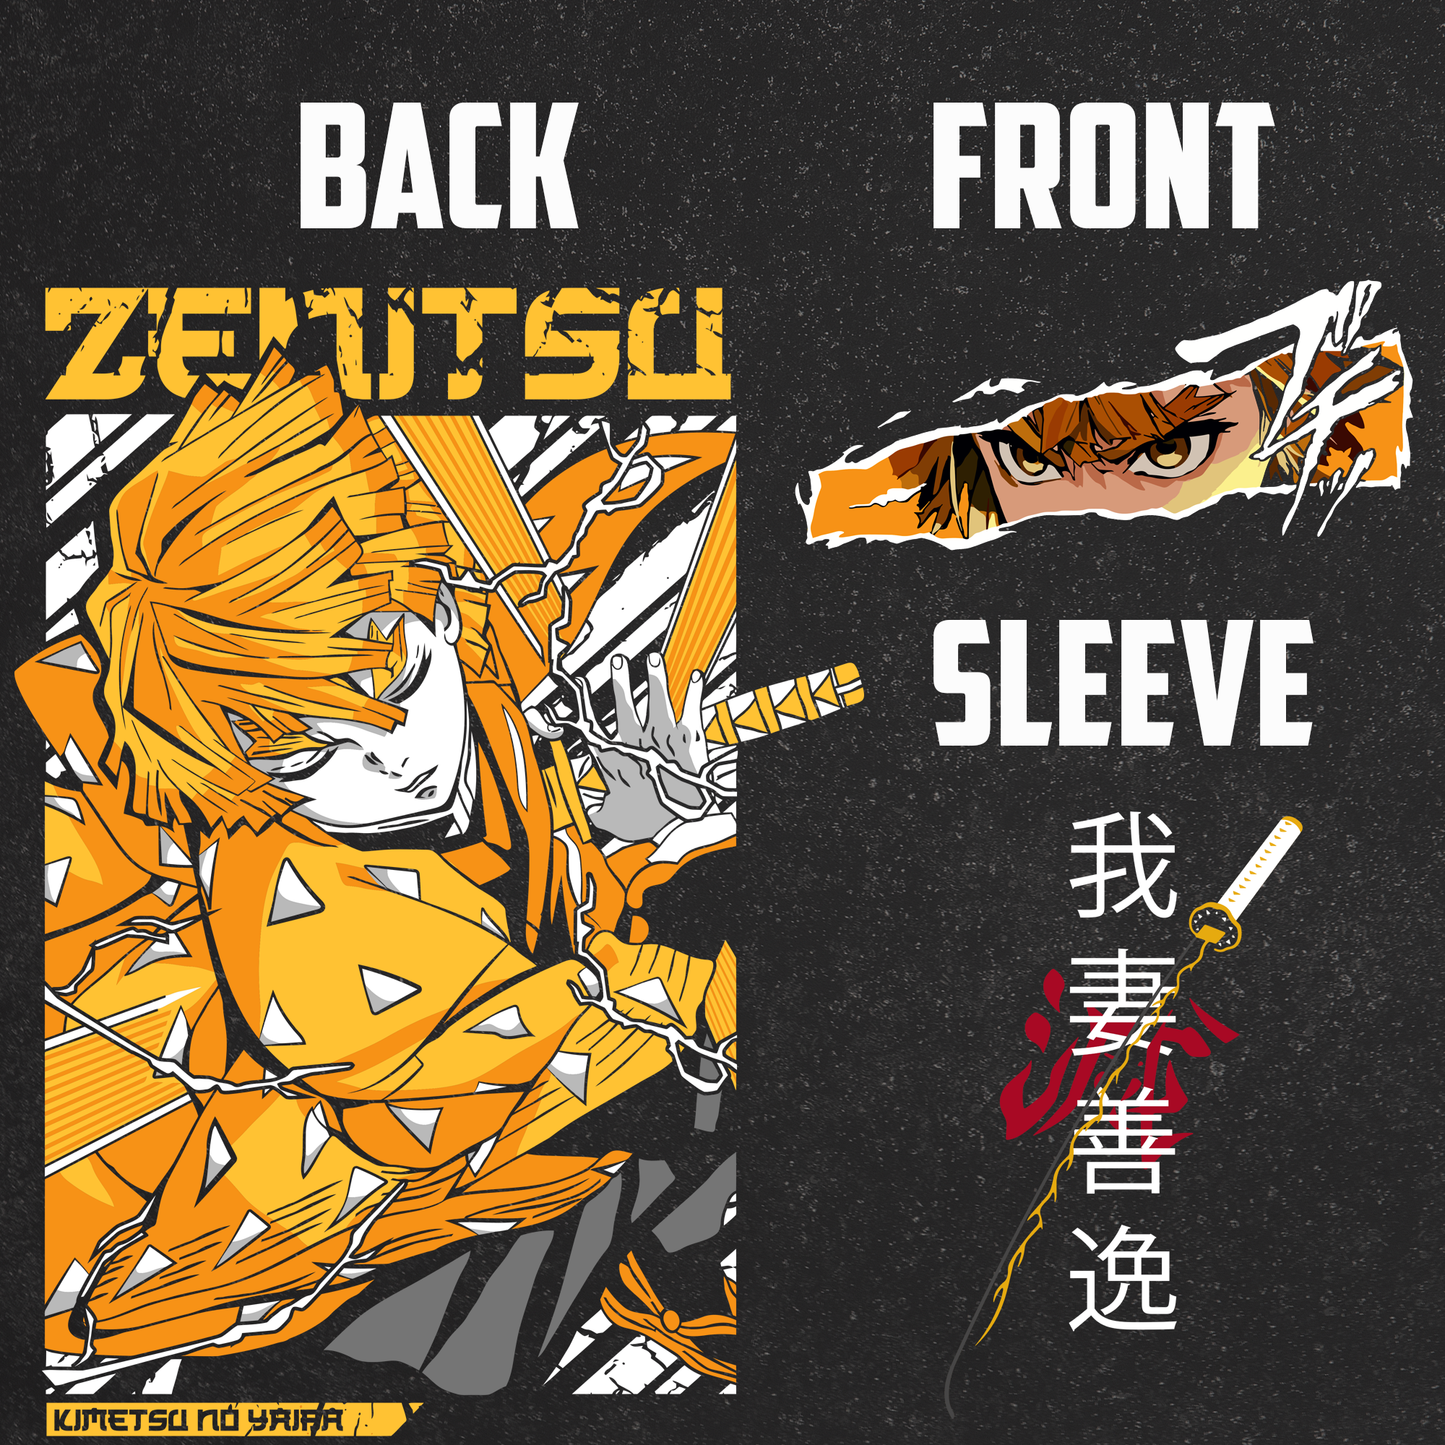 Zenitsu Agatsuma - Demon Slayer - Ministry of T-Shirt's Affairs